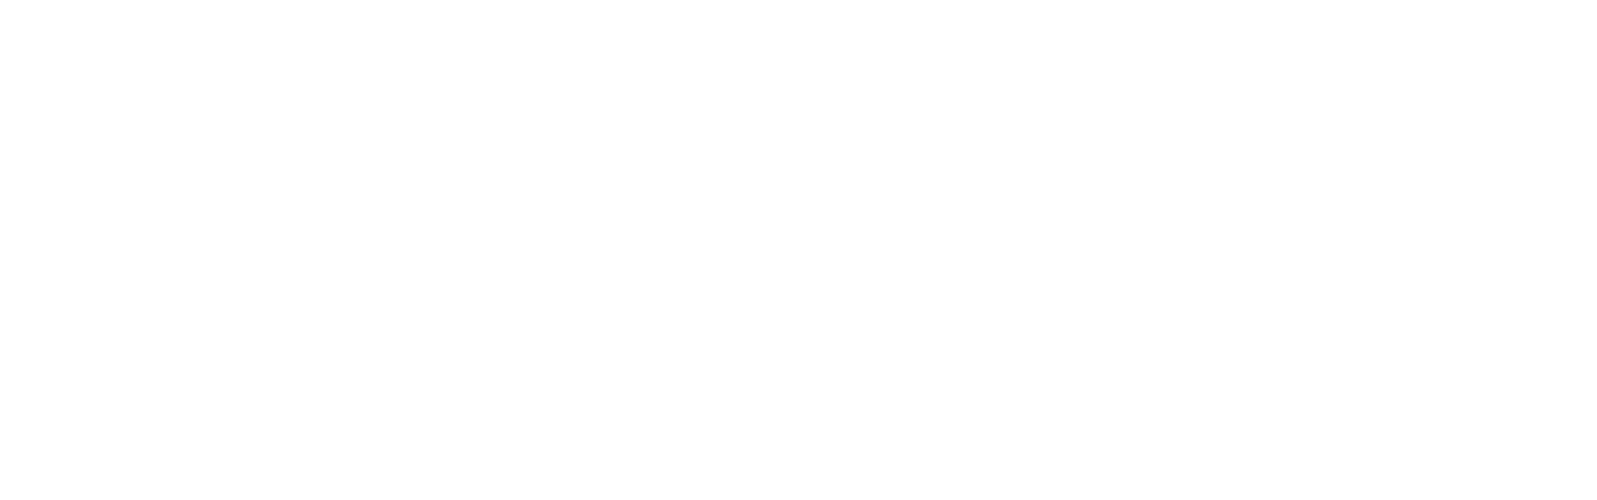 VICI Properties
 logo large for dark backgrounds (transparent PNG)